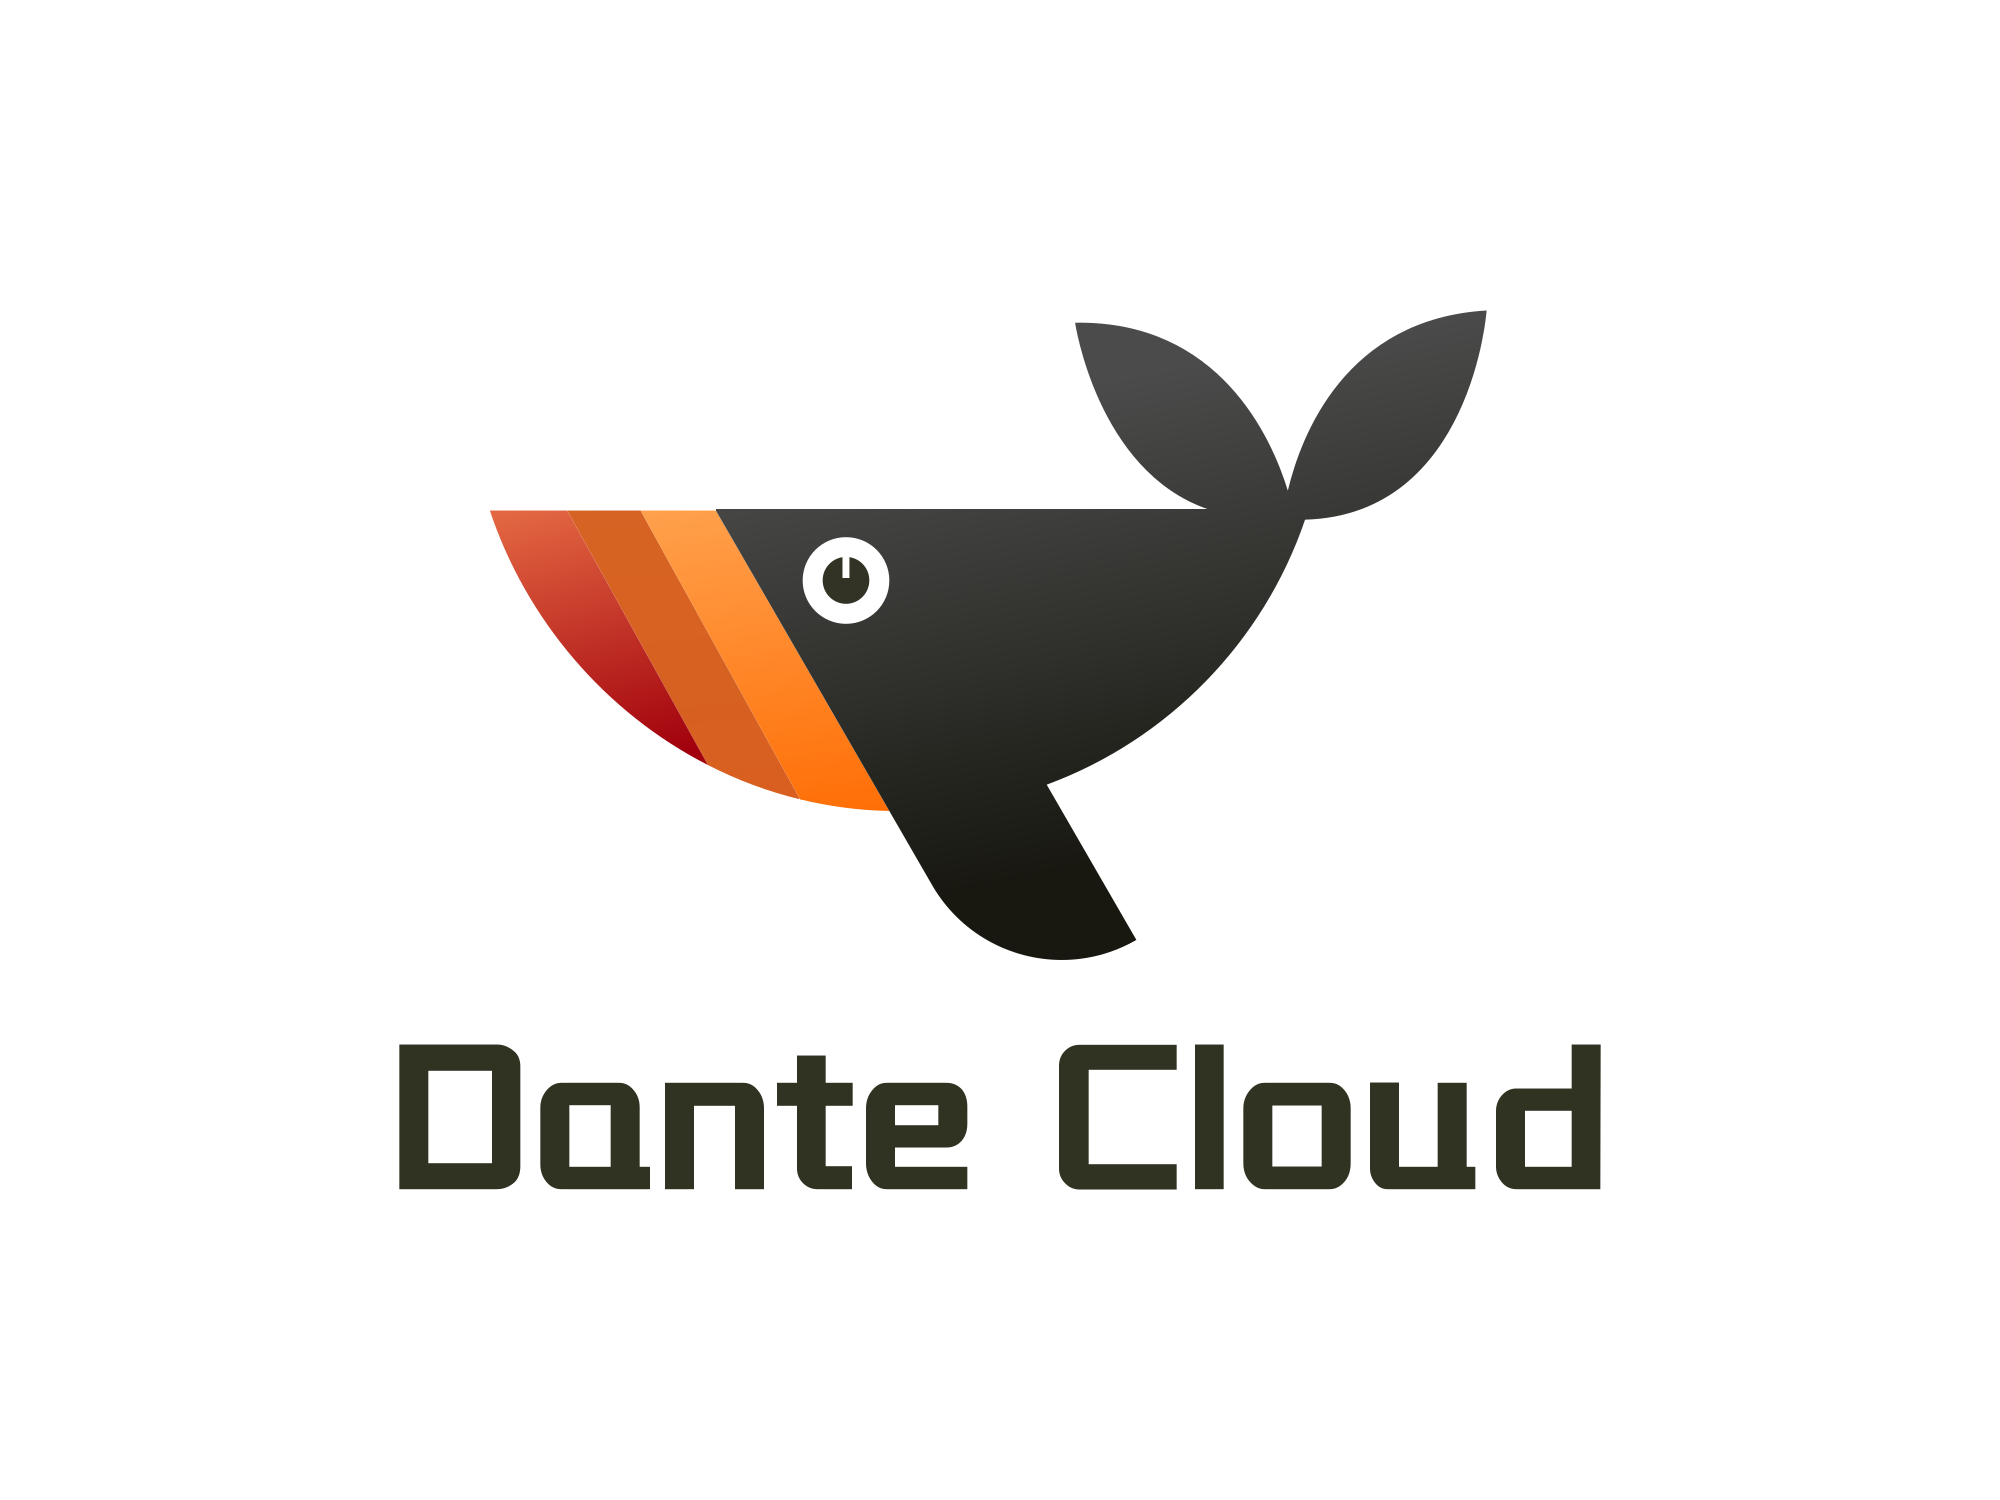 Dante Cloud 微服务解决方案